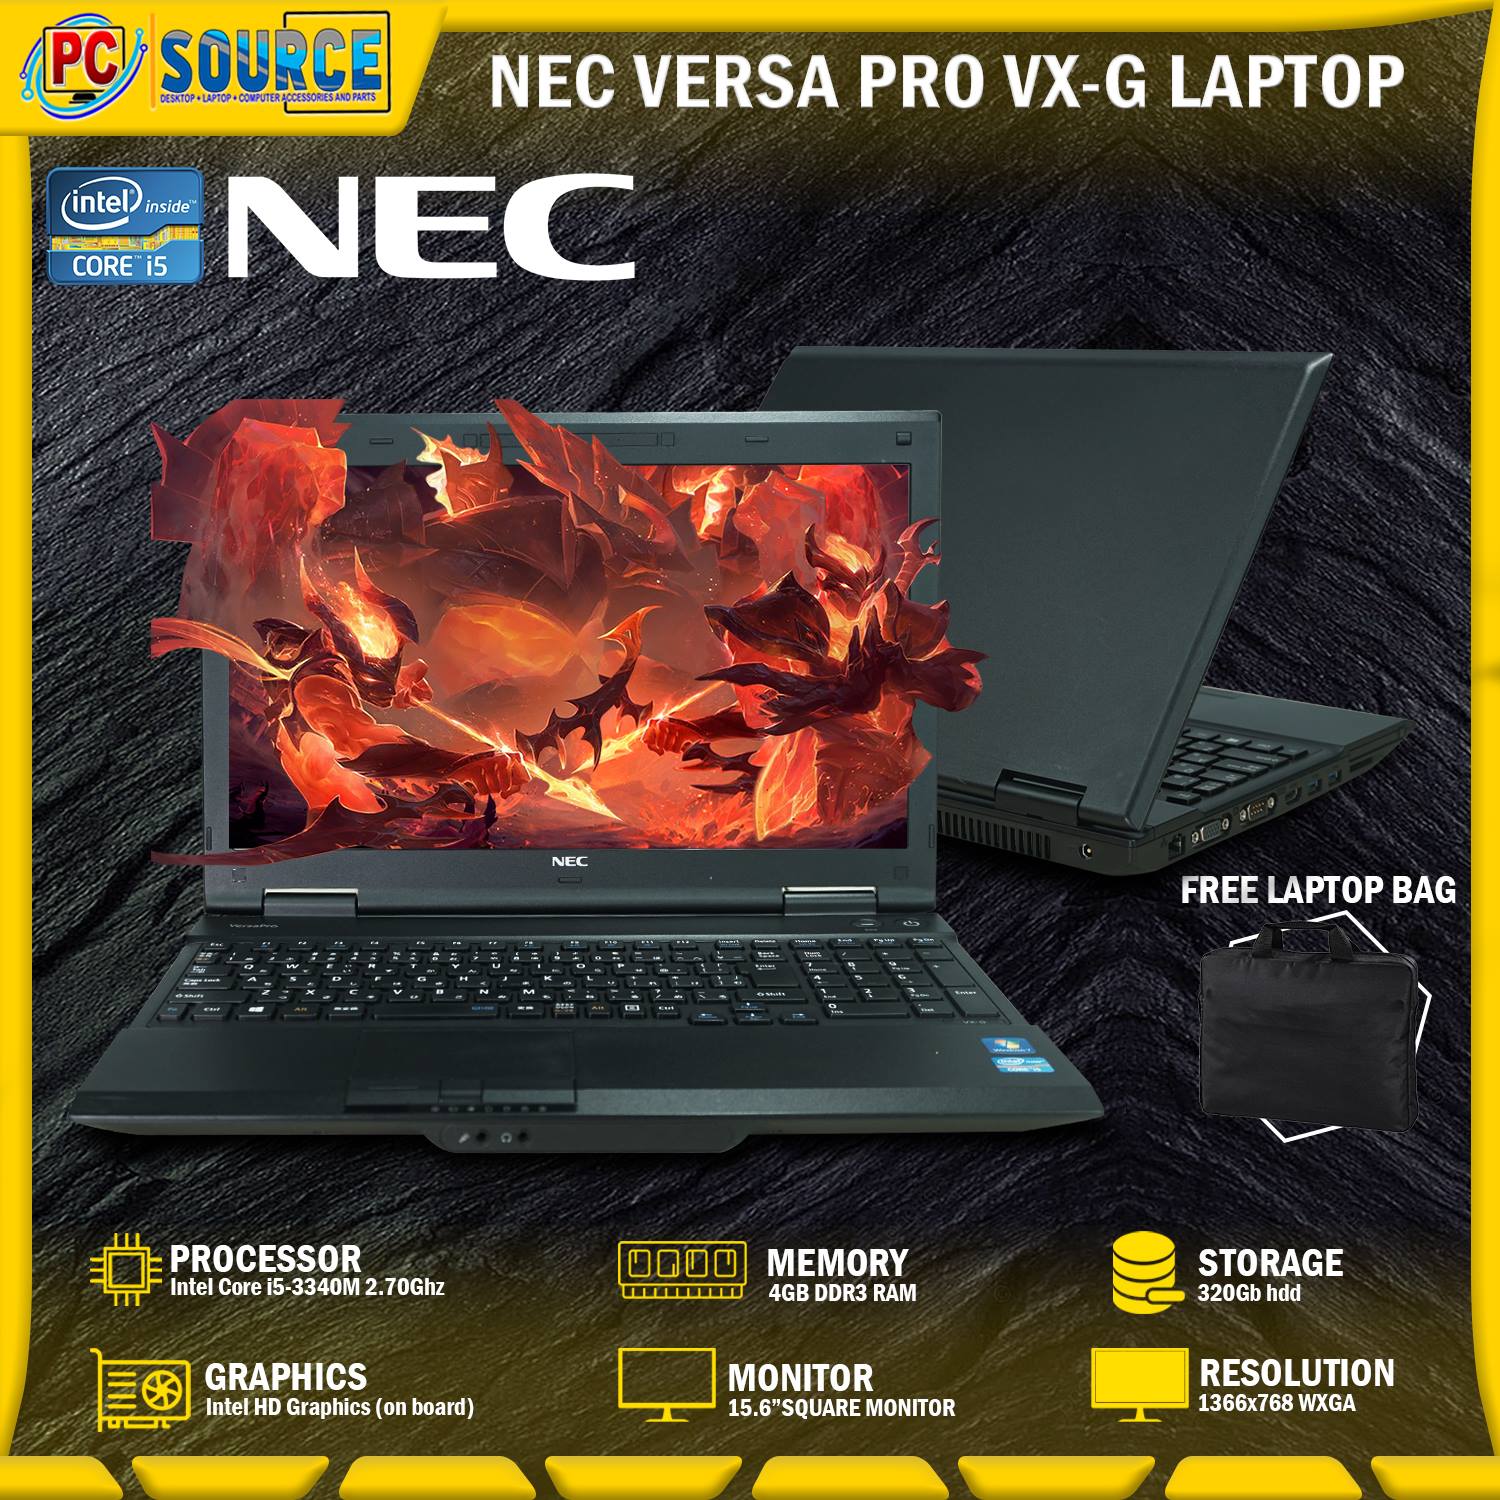 NEC Versapro VX-G Notebook Laptop | Intel Core i5 3340m 4GB RAM